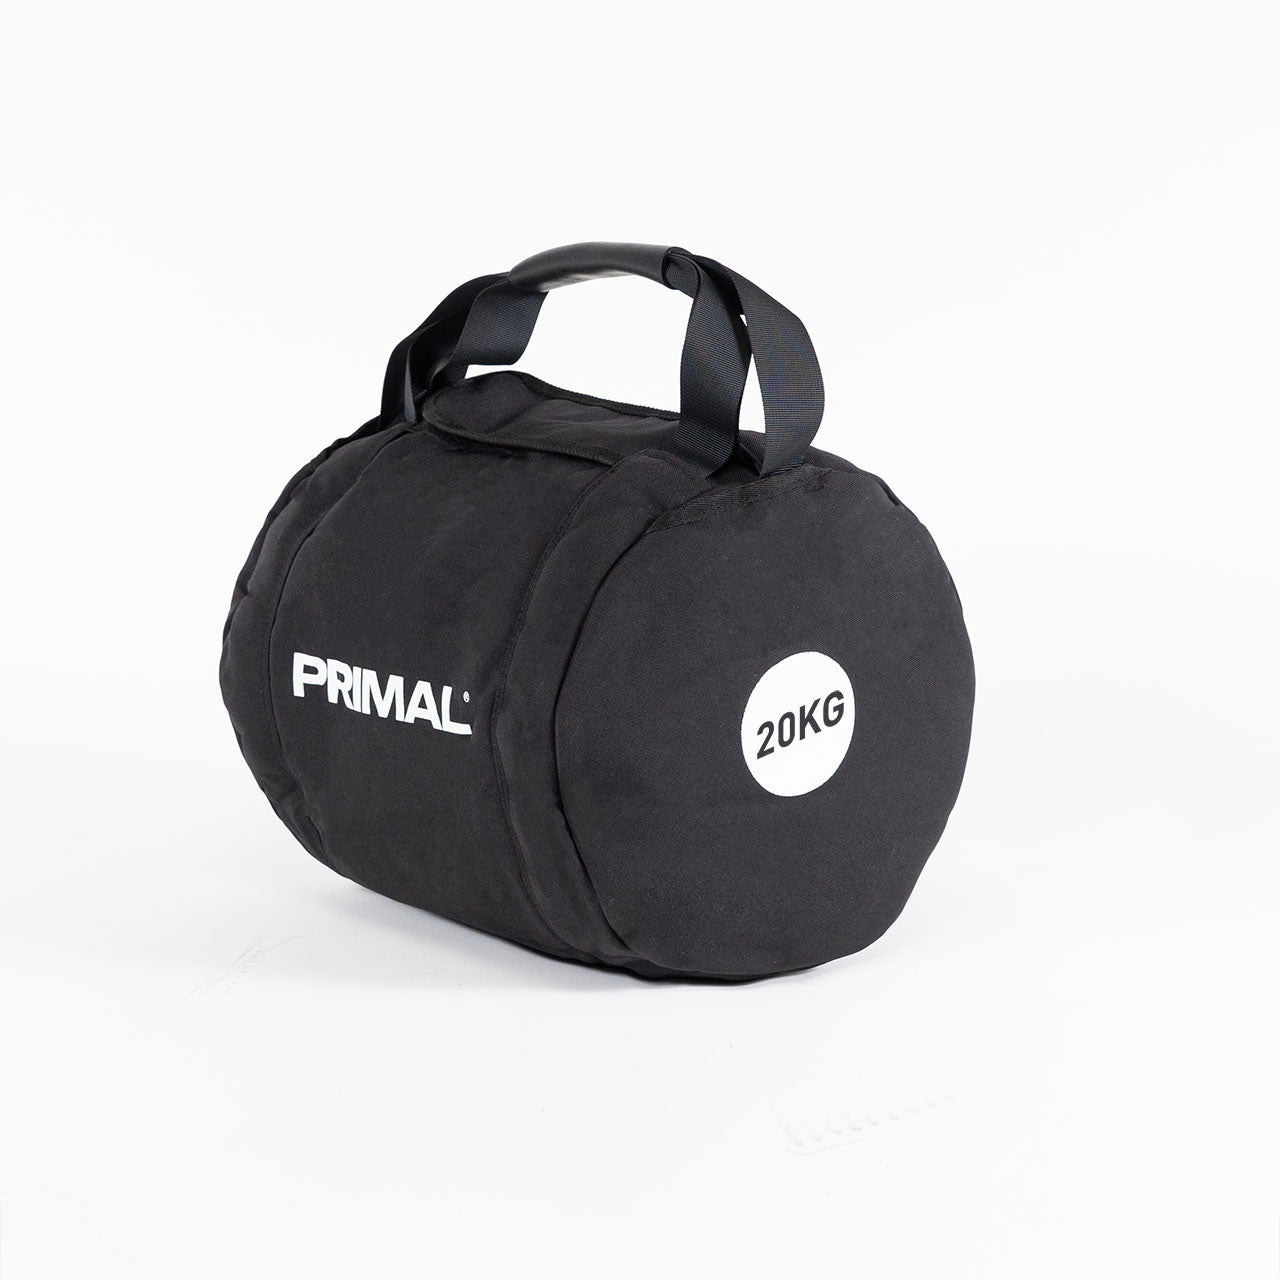 Primal Performance Series Throwing Bags